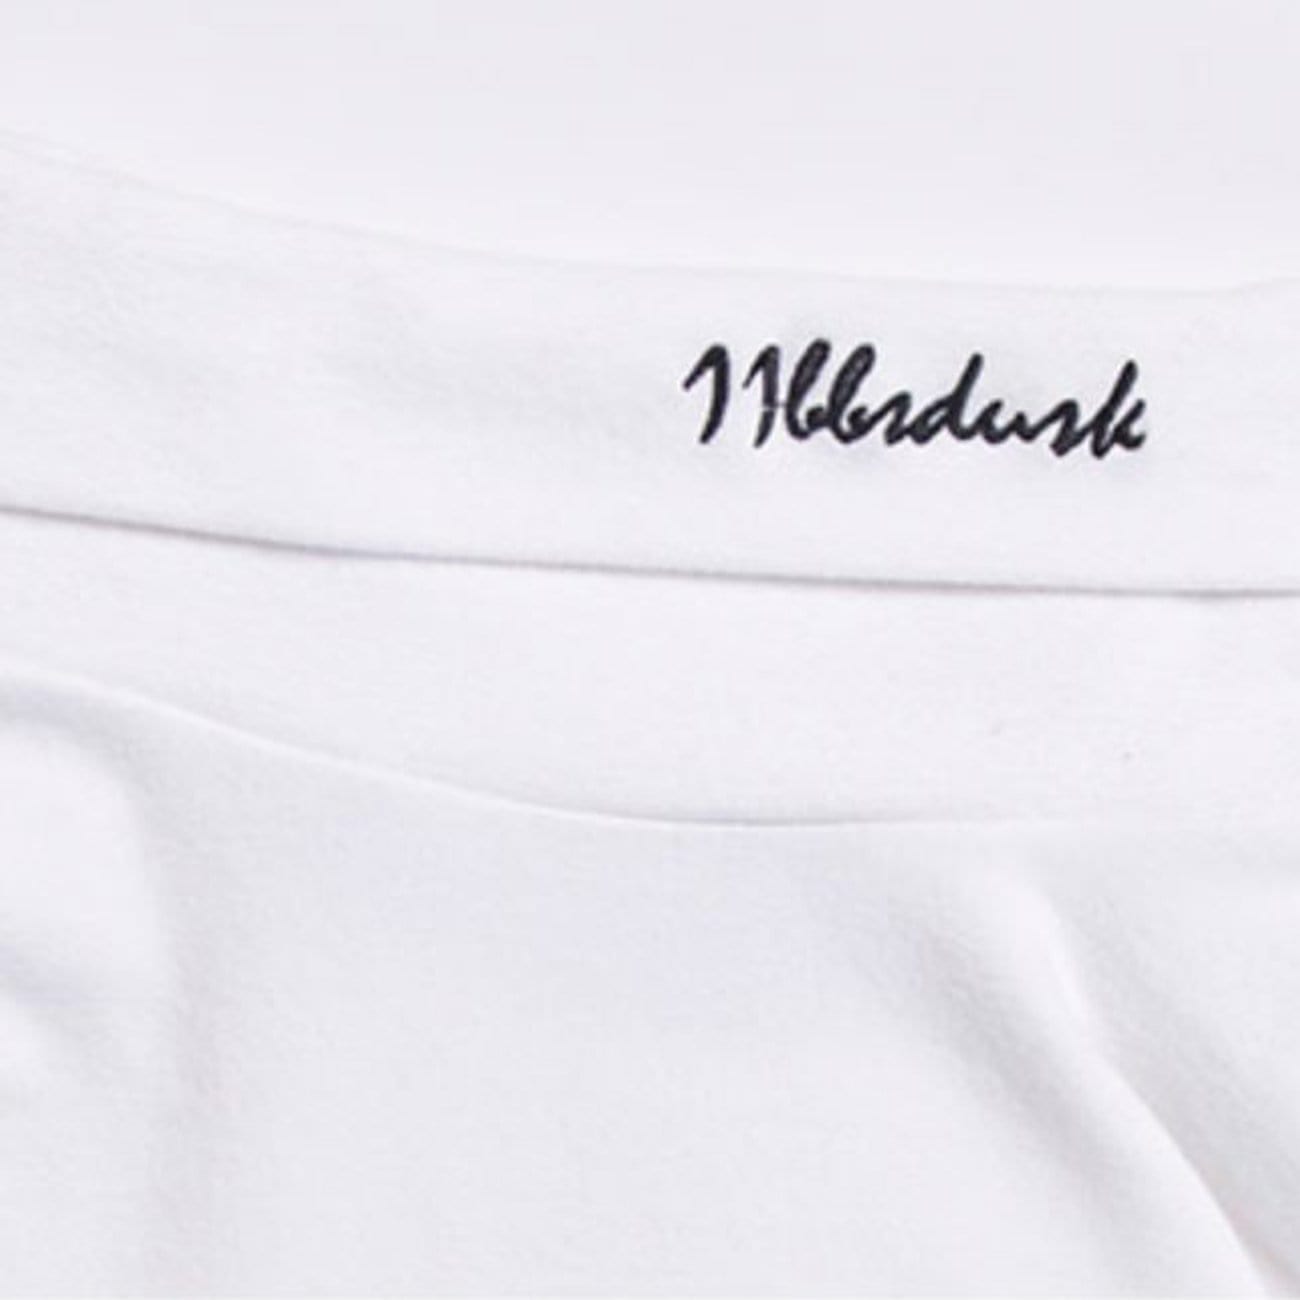 Dark Turtleneck Embroidery Sweatshirt Streetwear Brand Techwear Combat Tactical YUGEN THEORY